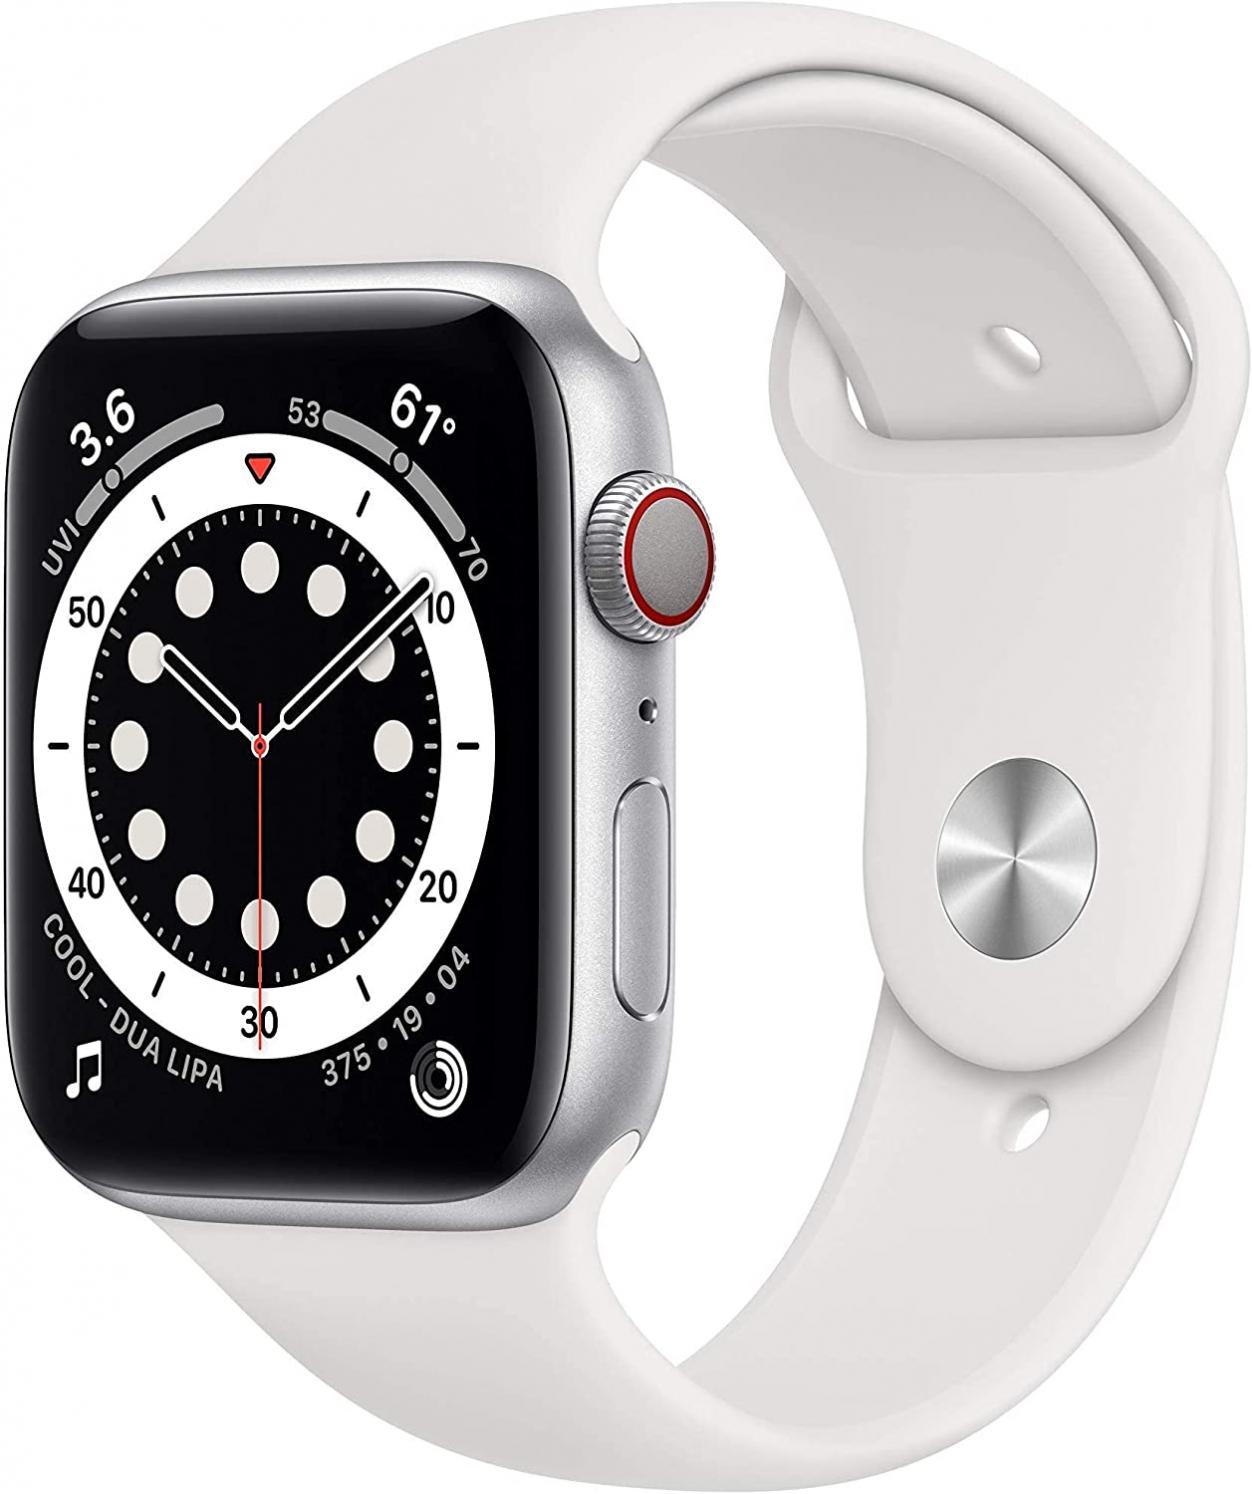 Apple Watch Series 6 (GPS + Cellular, 44mm) - Aluminum Case (Renewed)